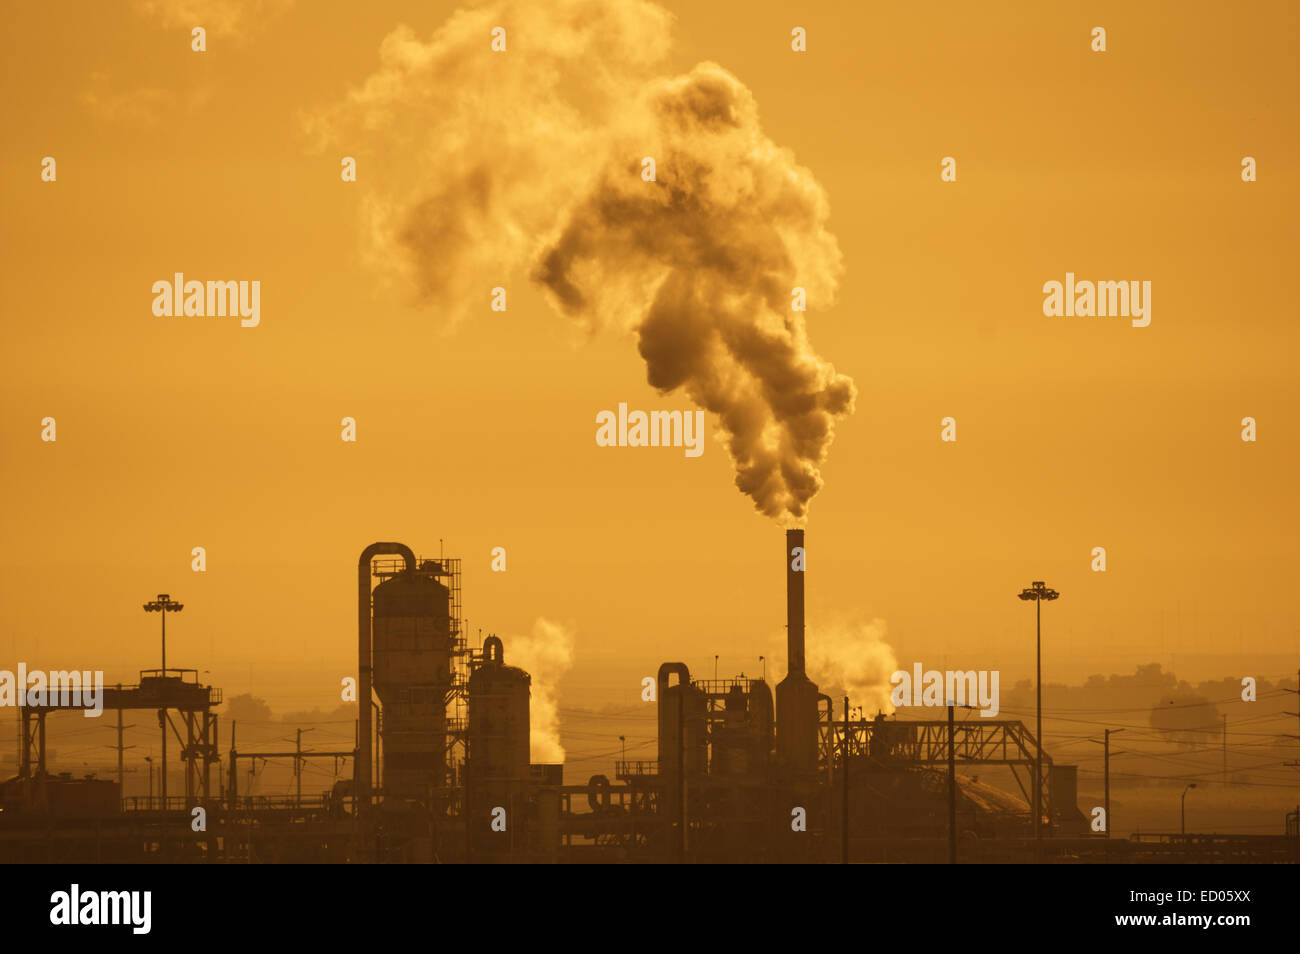 Impianto industriale con l'inquinamento atmosferico in un vago cielo arancione Foto Stock